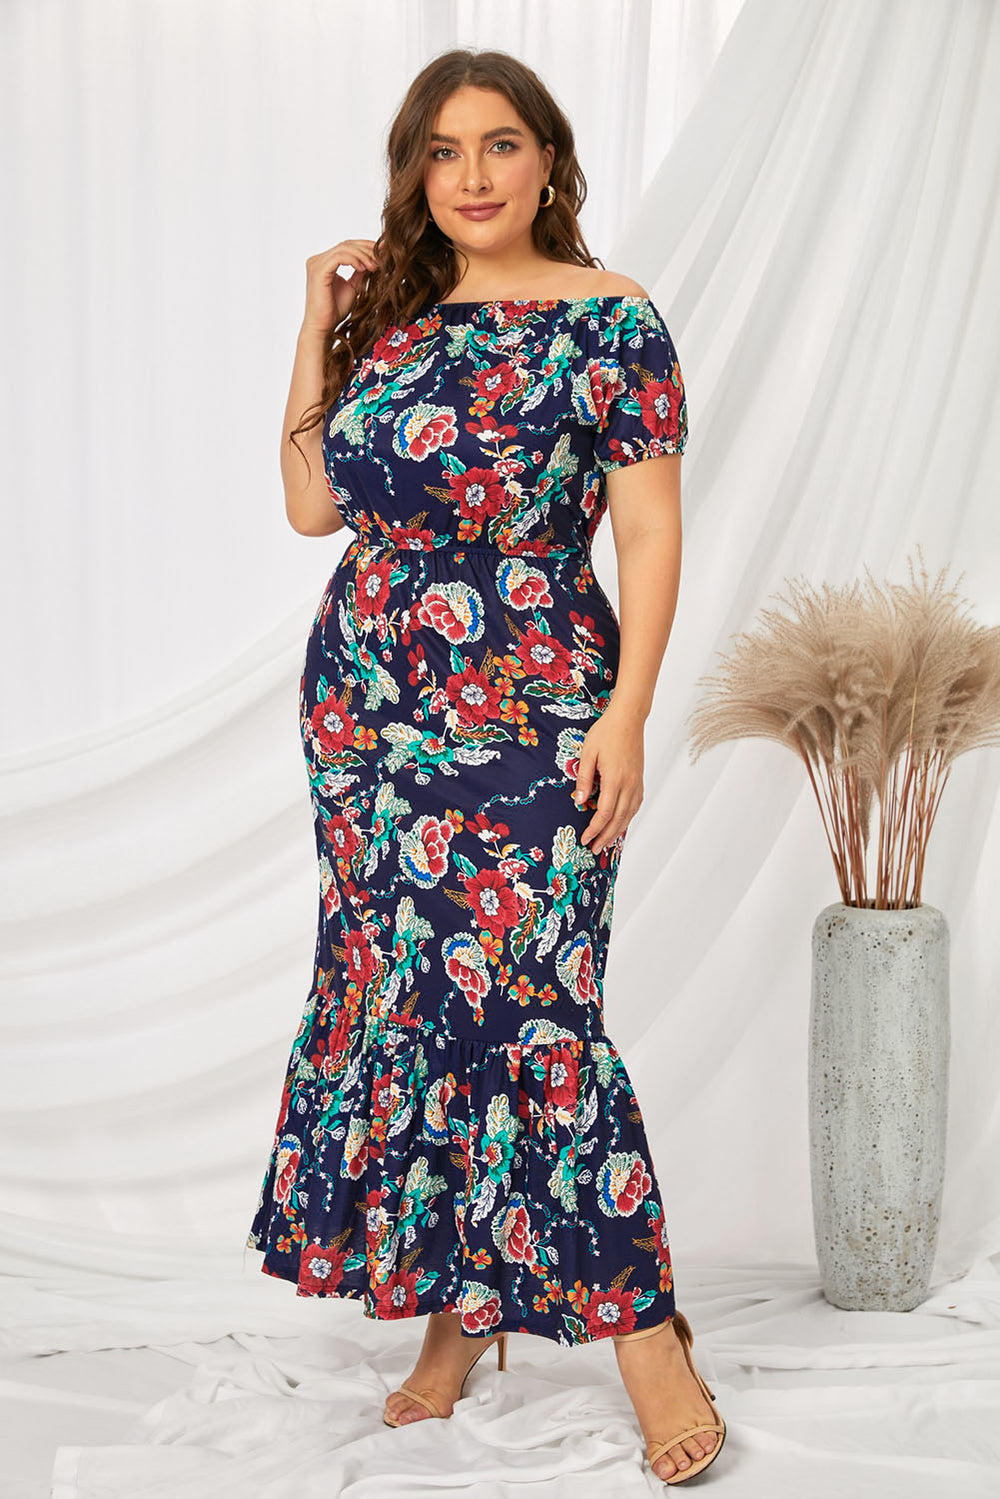 Black Off-the-shoulder Floral Ruffle Short Sleeve Plus Size Maxi Dress